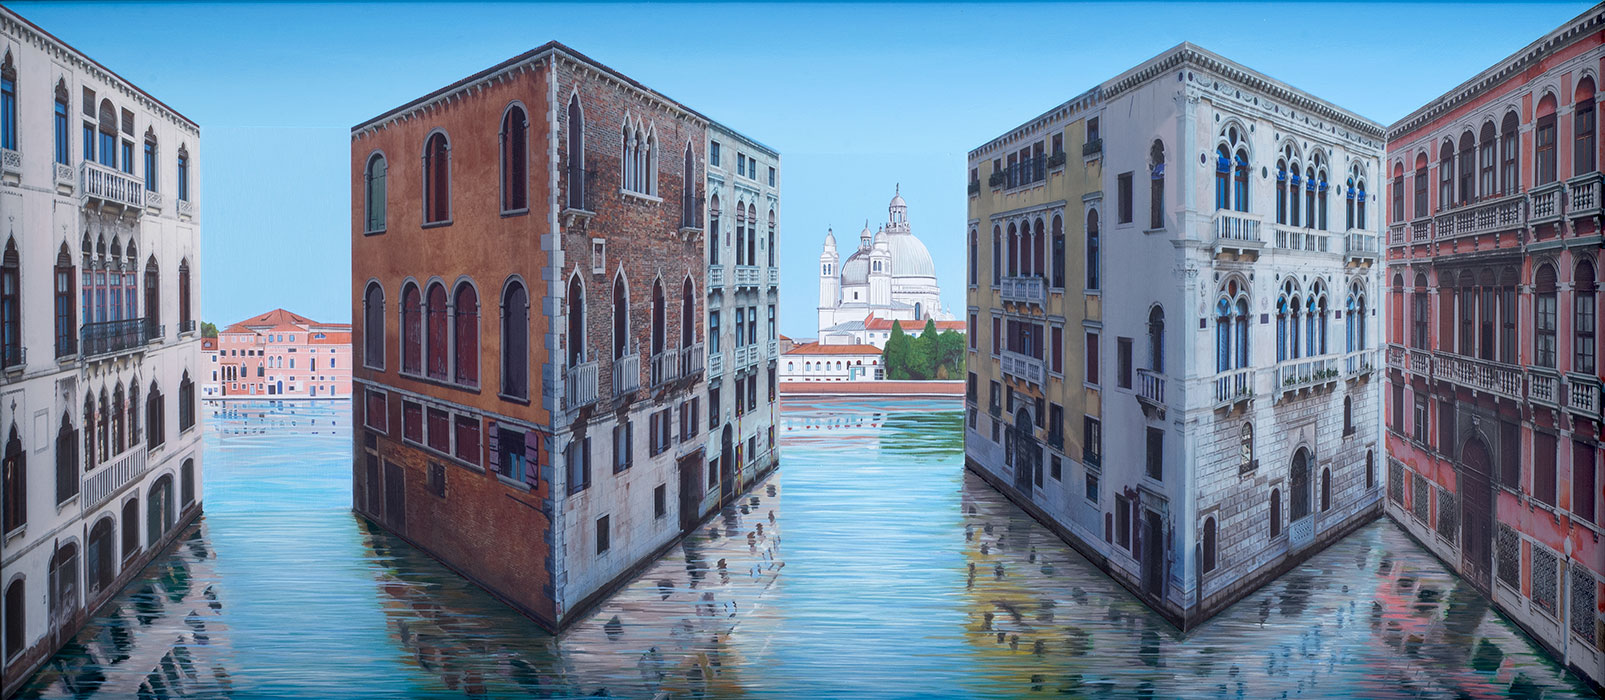 Contemplating Venice <p>2020 | Edition 5 | 51.5 x 118 x 23 cm / 20 ¼ x 46 ½ x 9 in</p>

